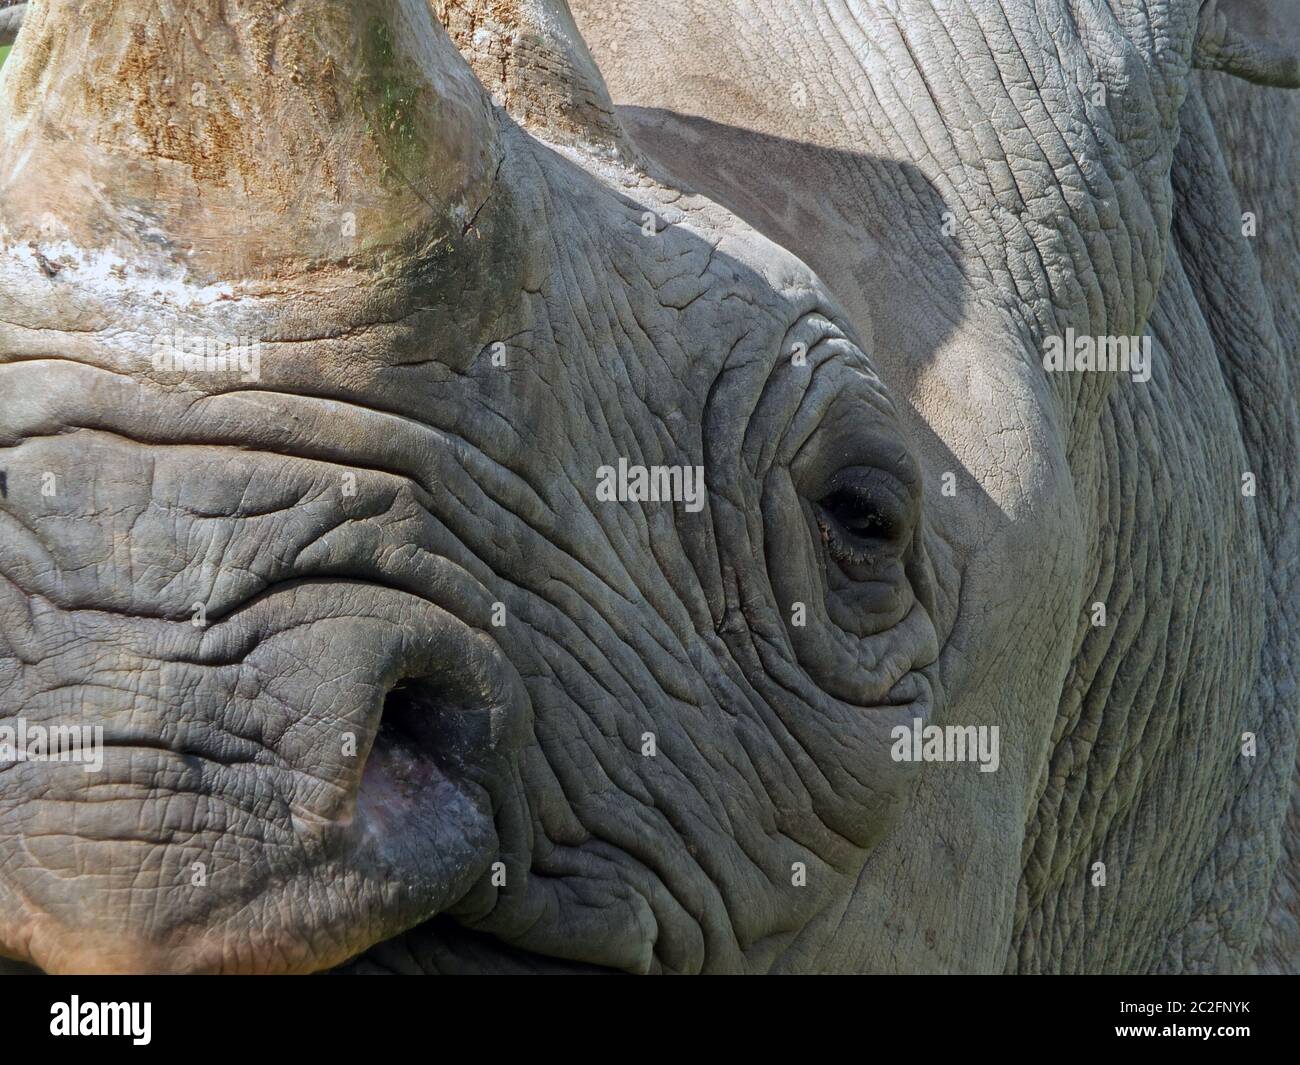 Premium Photo  Horn wide angle rhino grey skin expressive eyes symmetry  protection facing away sharp deep